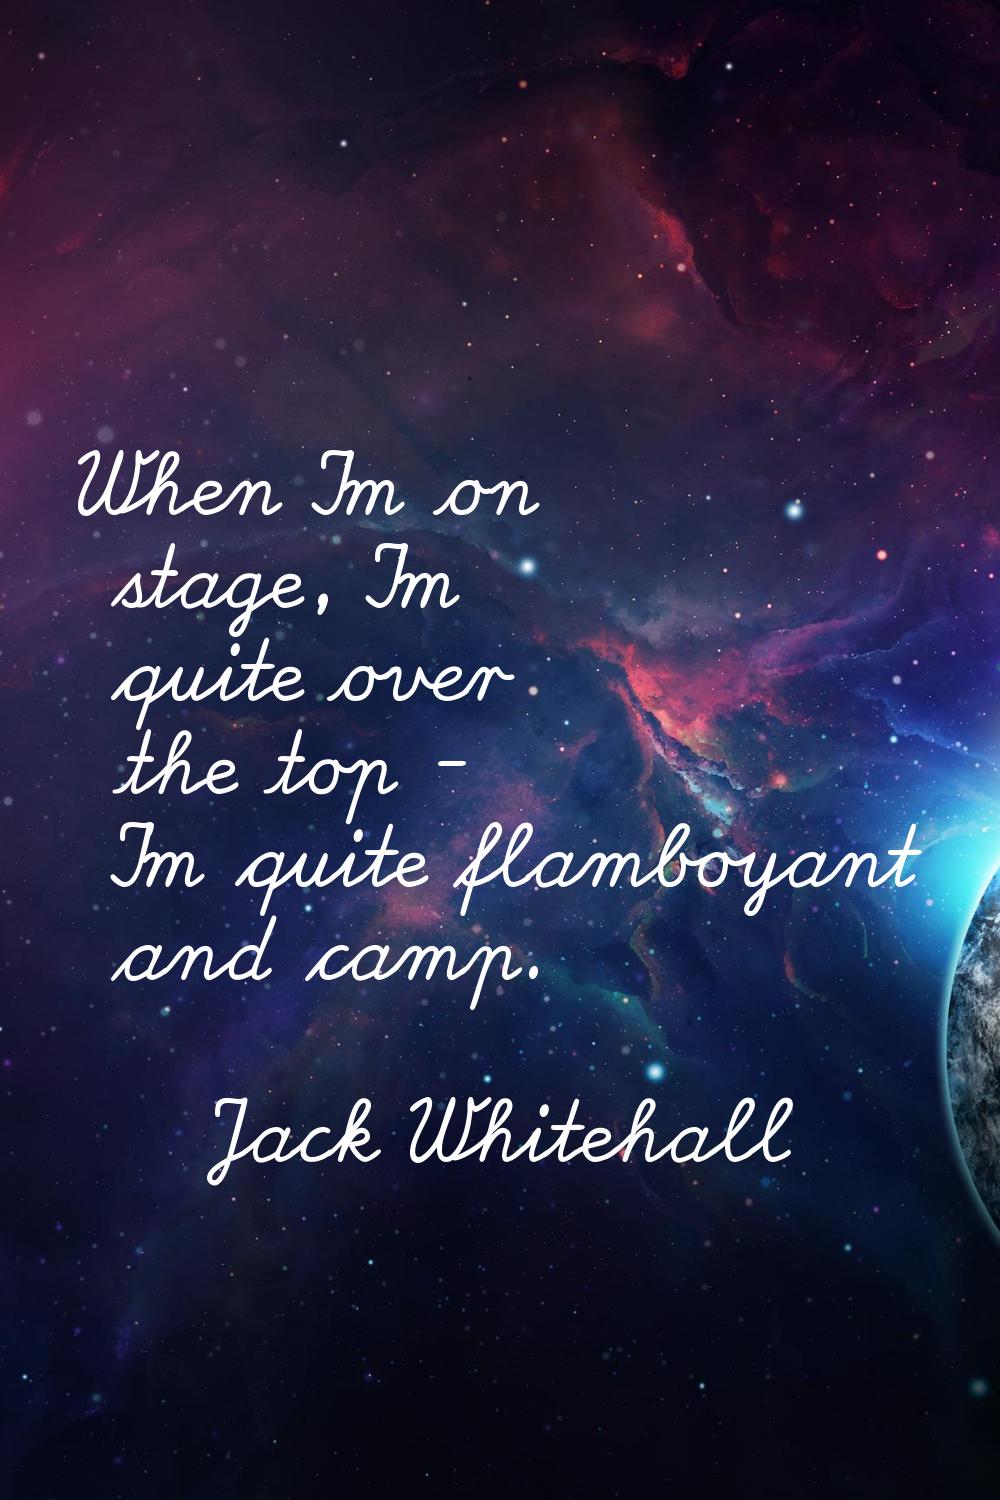 When I'm on stage, I'm quite over the top - I'm quite flamboyant and camp.